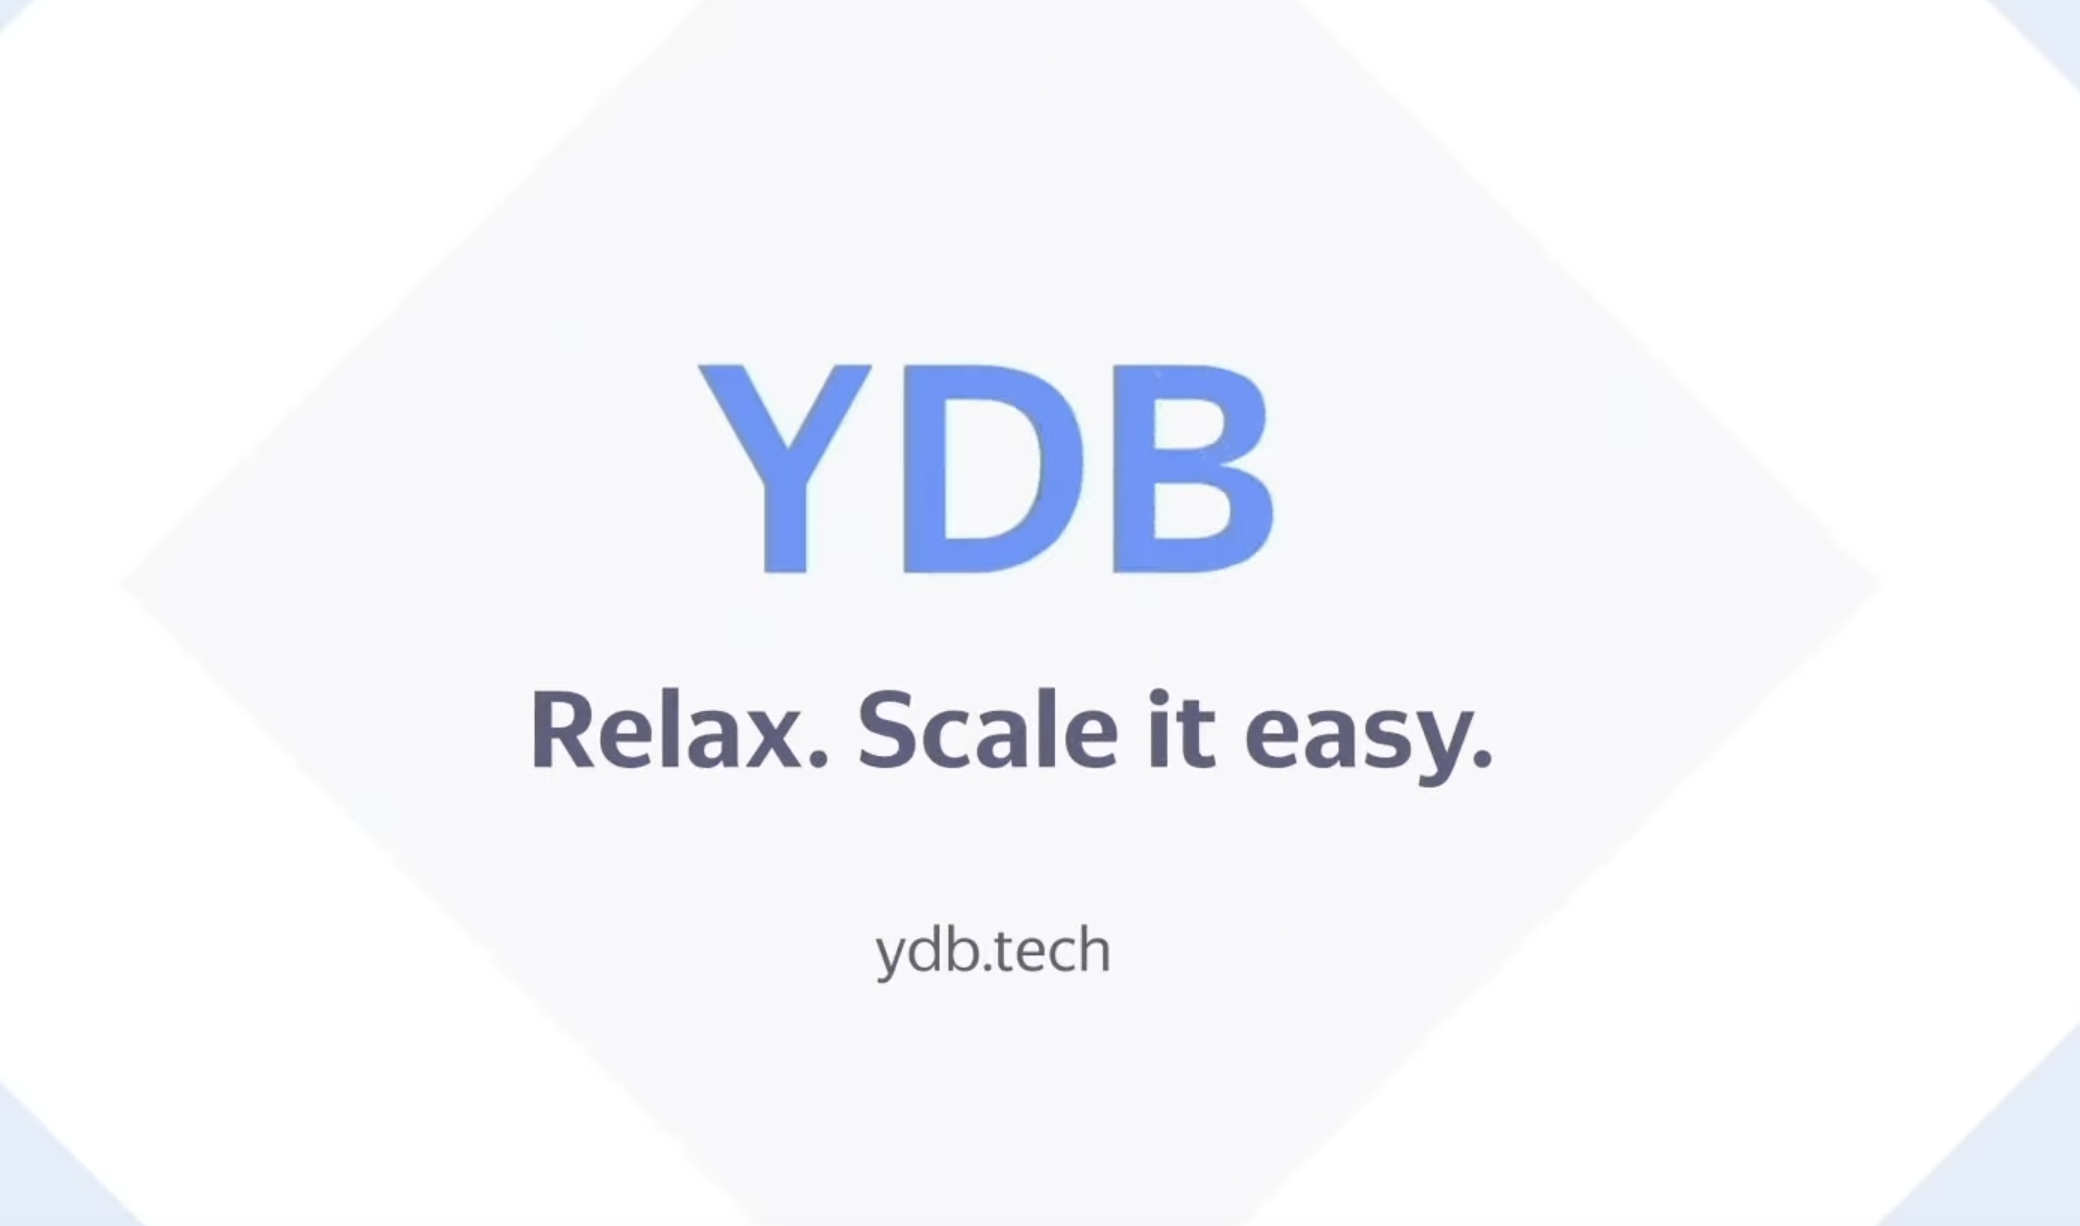 Yandex 在 GitHub 开源 YDB 数据库